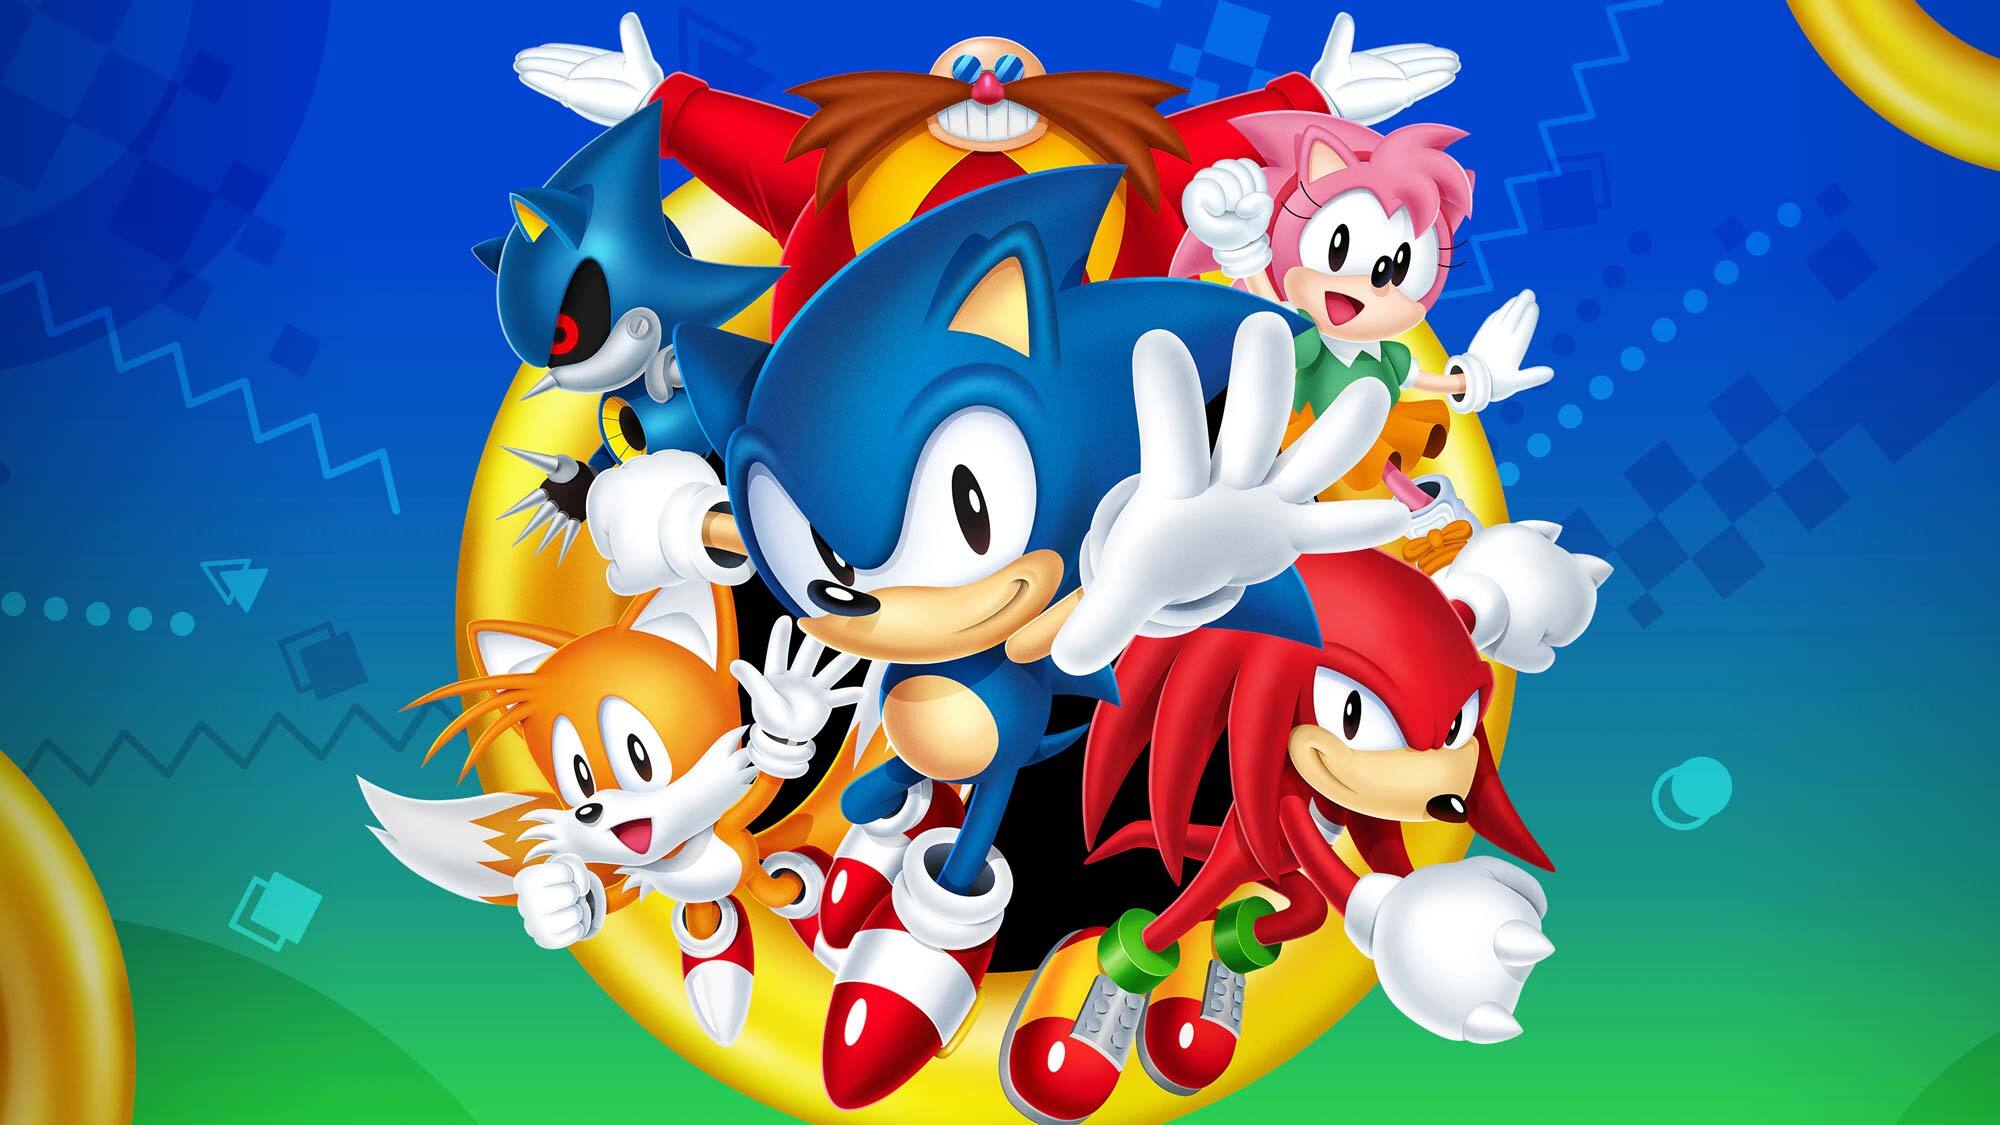 Sonic 2d game on way arabgamerz عرب جيمرز لعبة سونيك ثنائية البعد تطوير